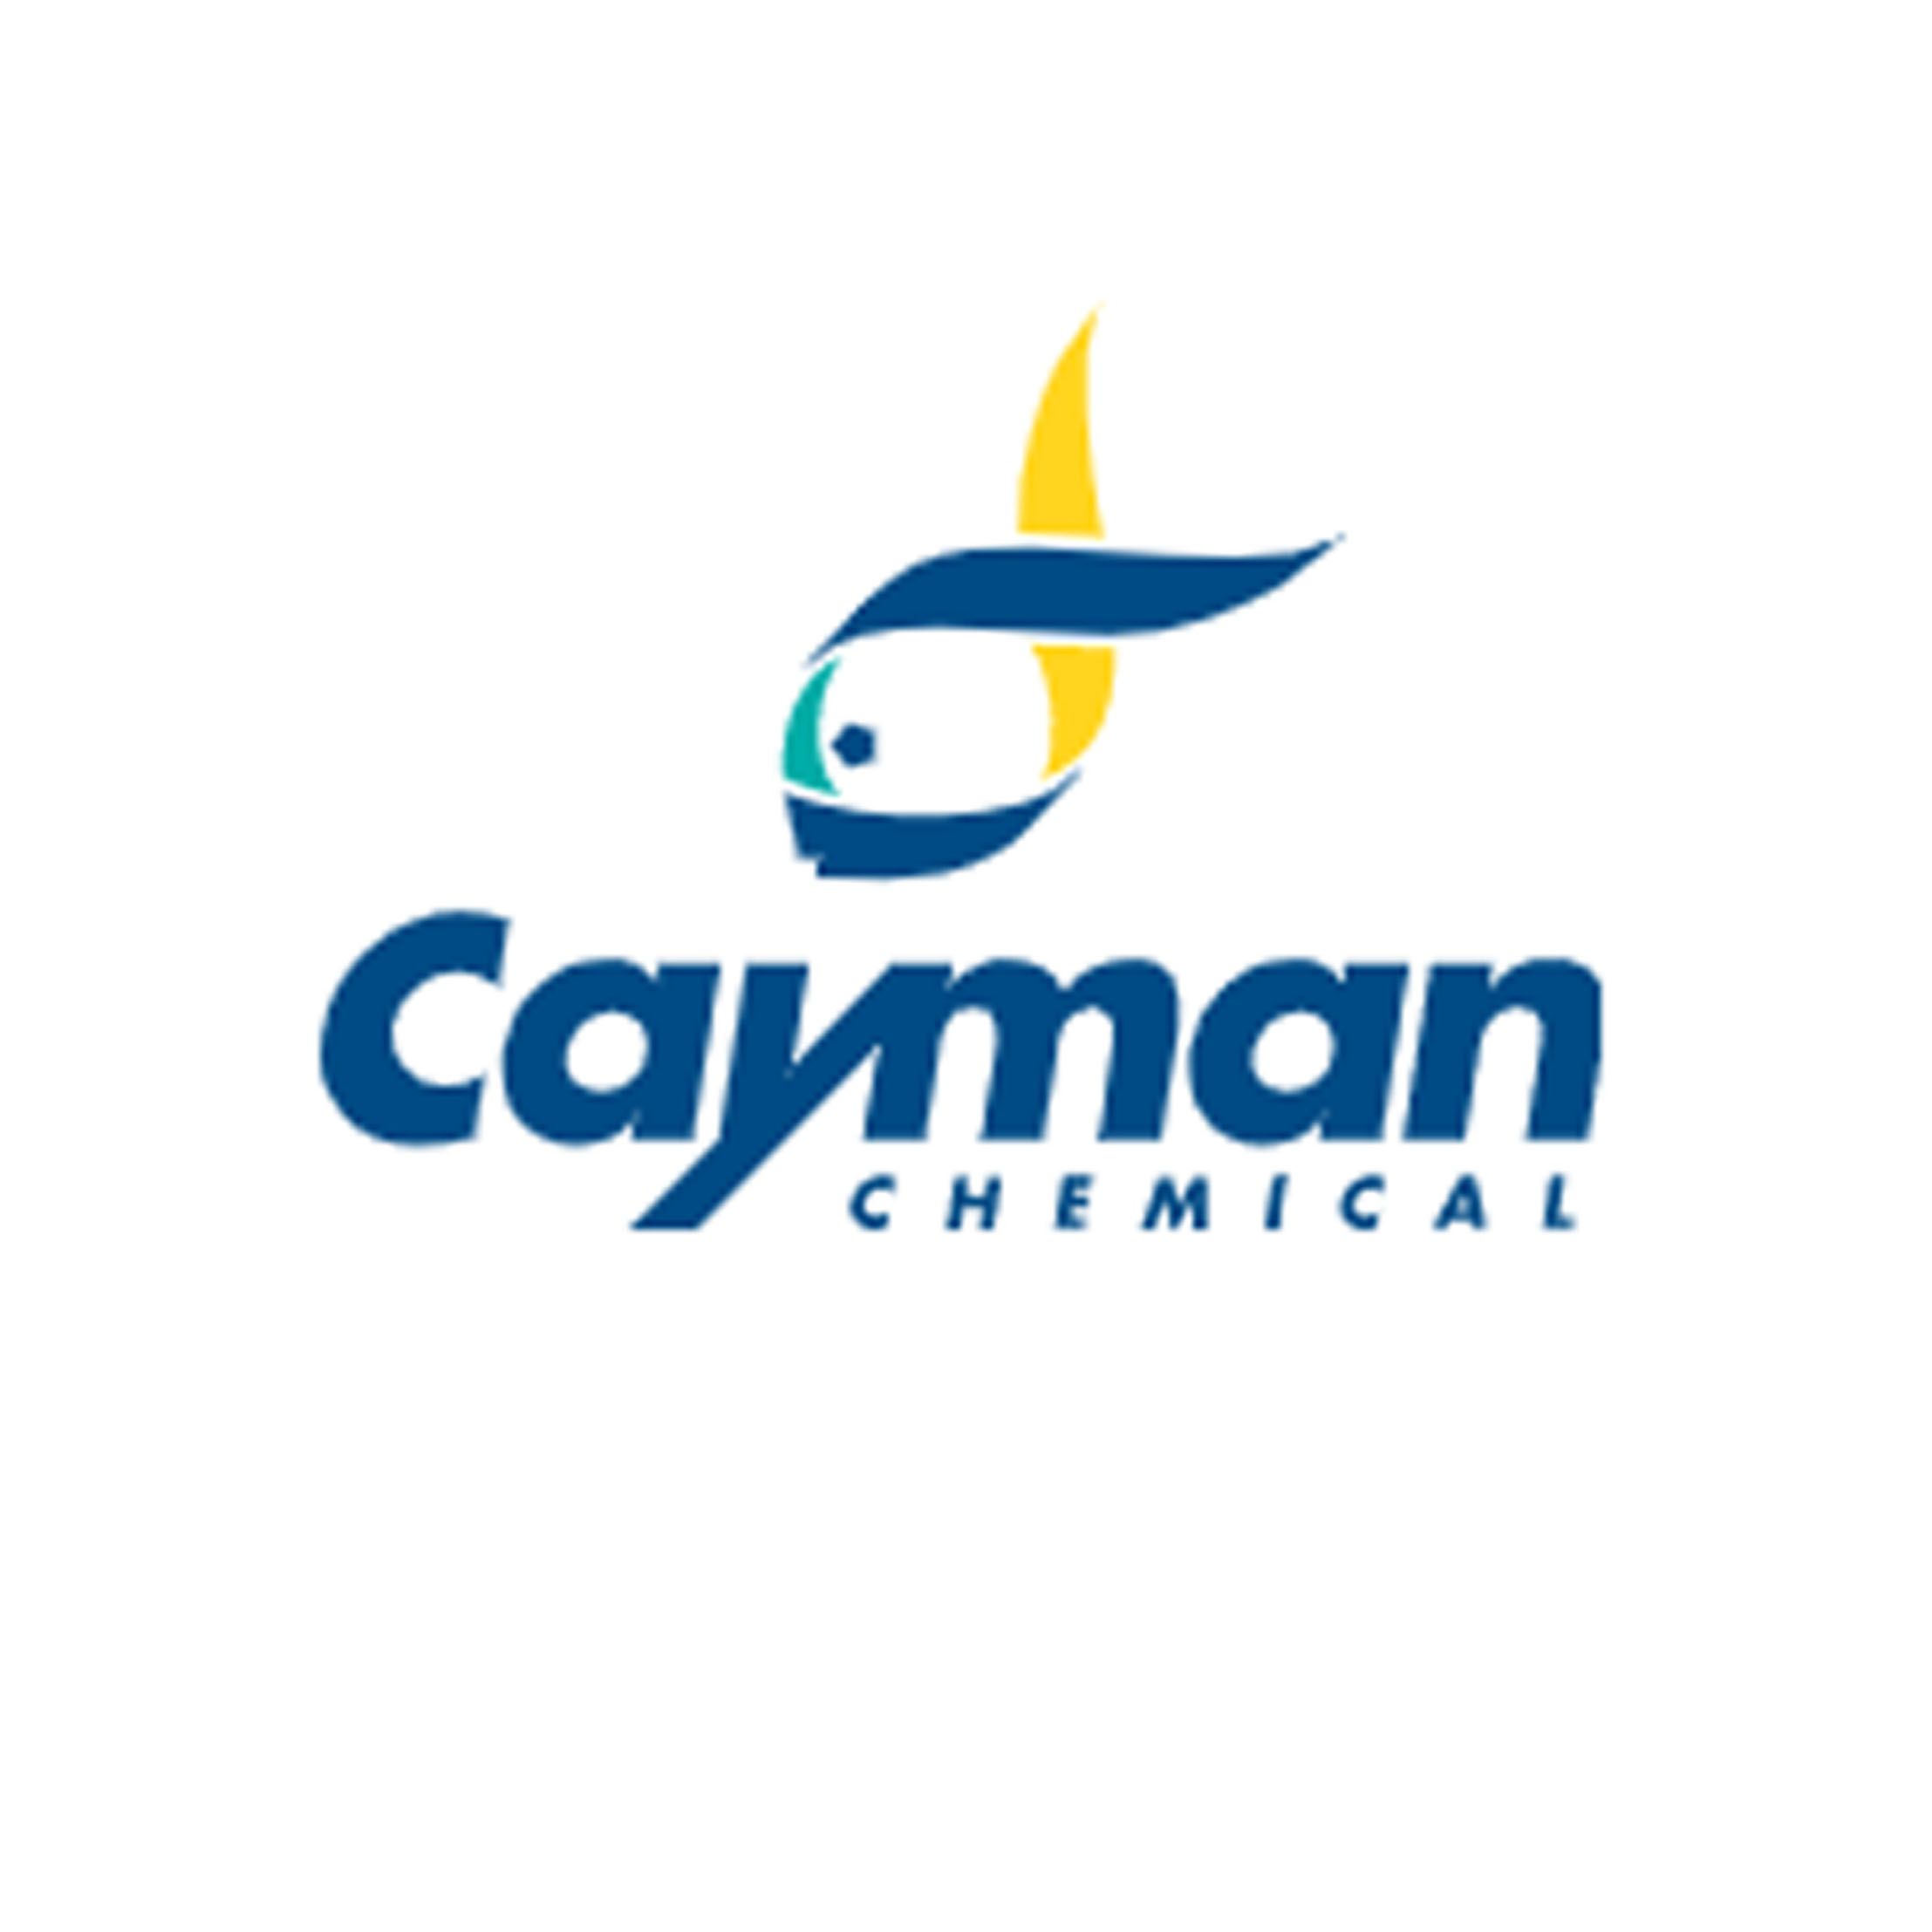 Cayman 10011671 Soluble Epoxide Hydrolase Inhibitor Screening Assay Kit可溶性环氧化物水解酶抑制剂筛选试剂盒-96次分析。现货